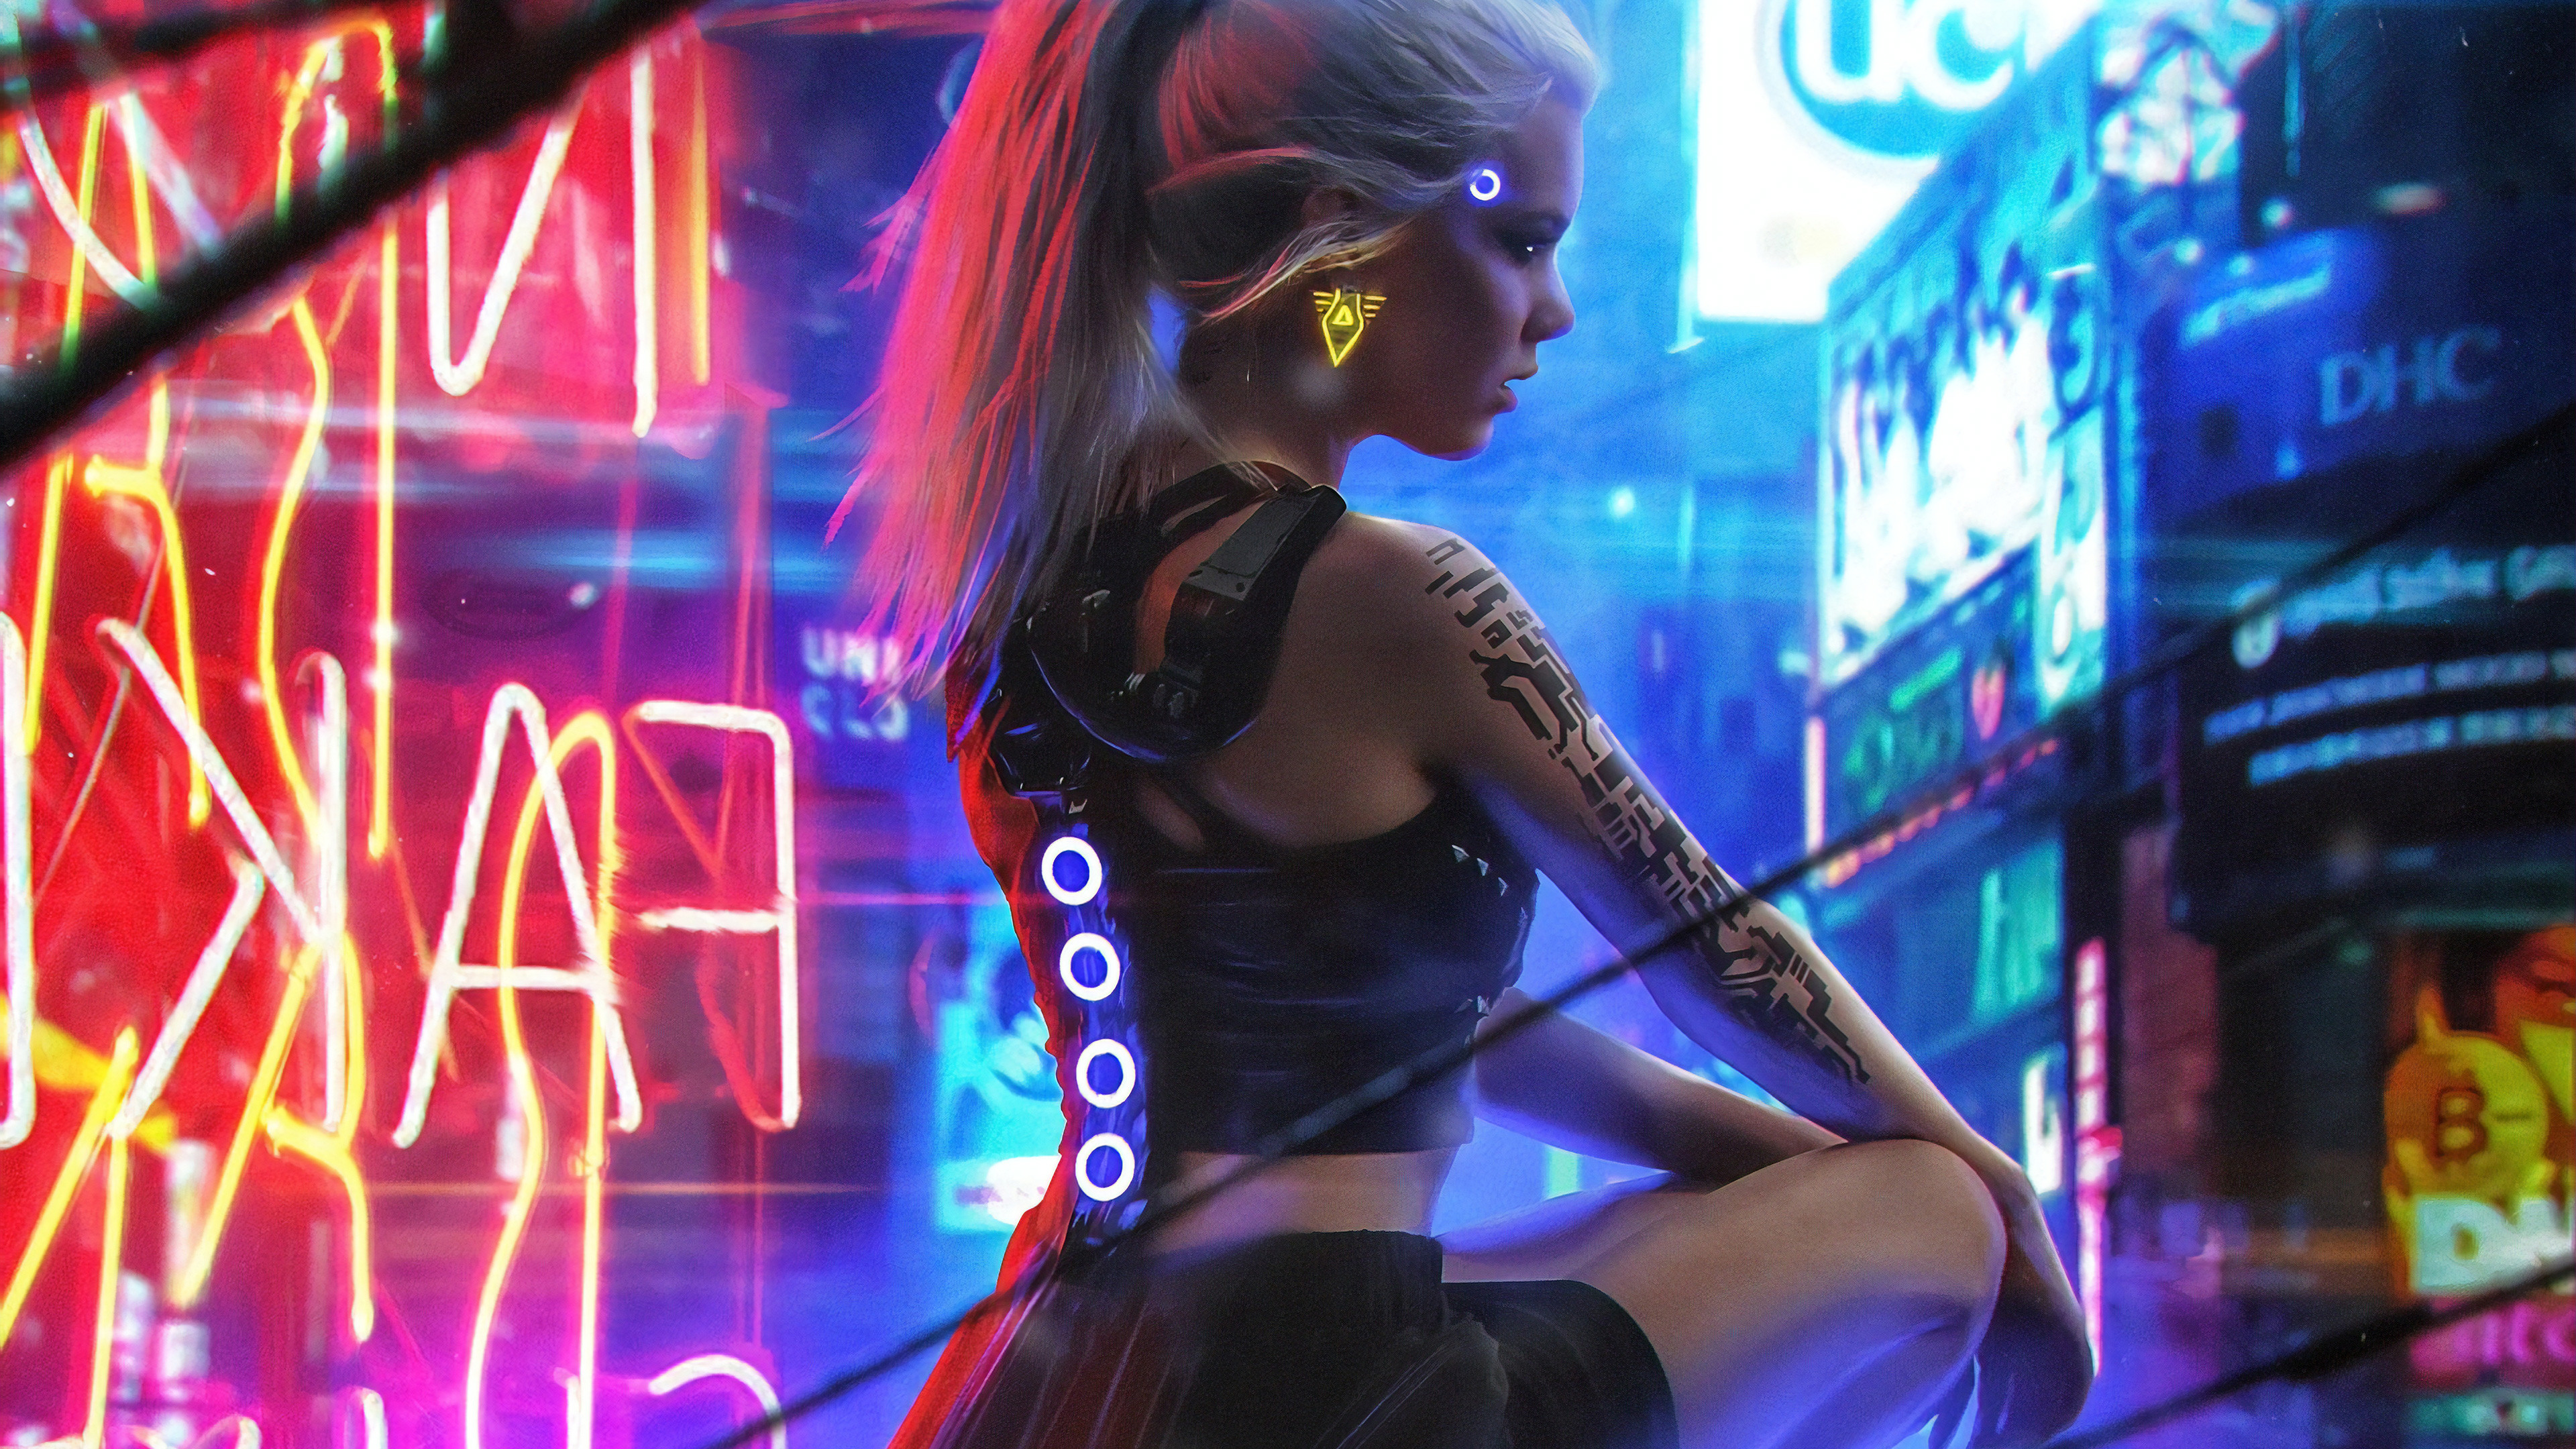 Cyberpunk Girl 4k Wallpaper